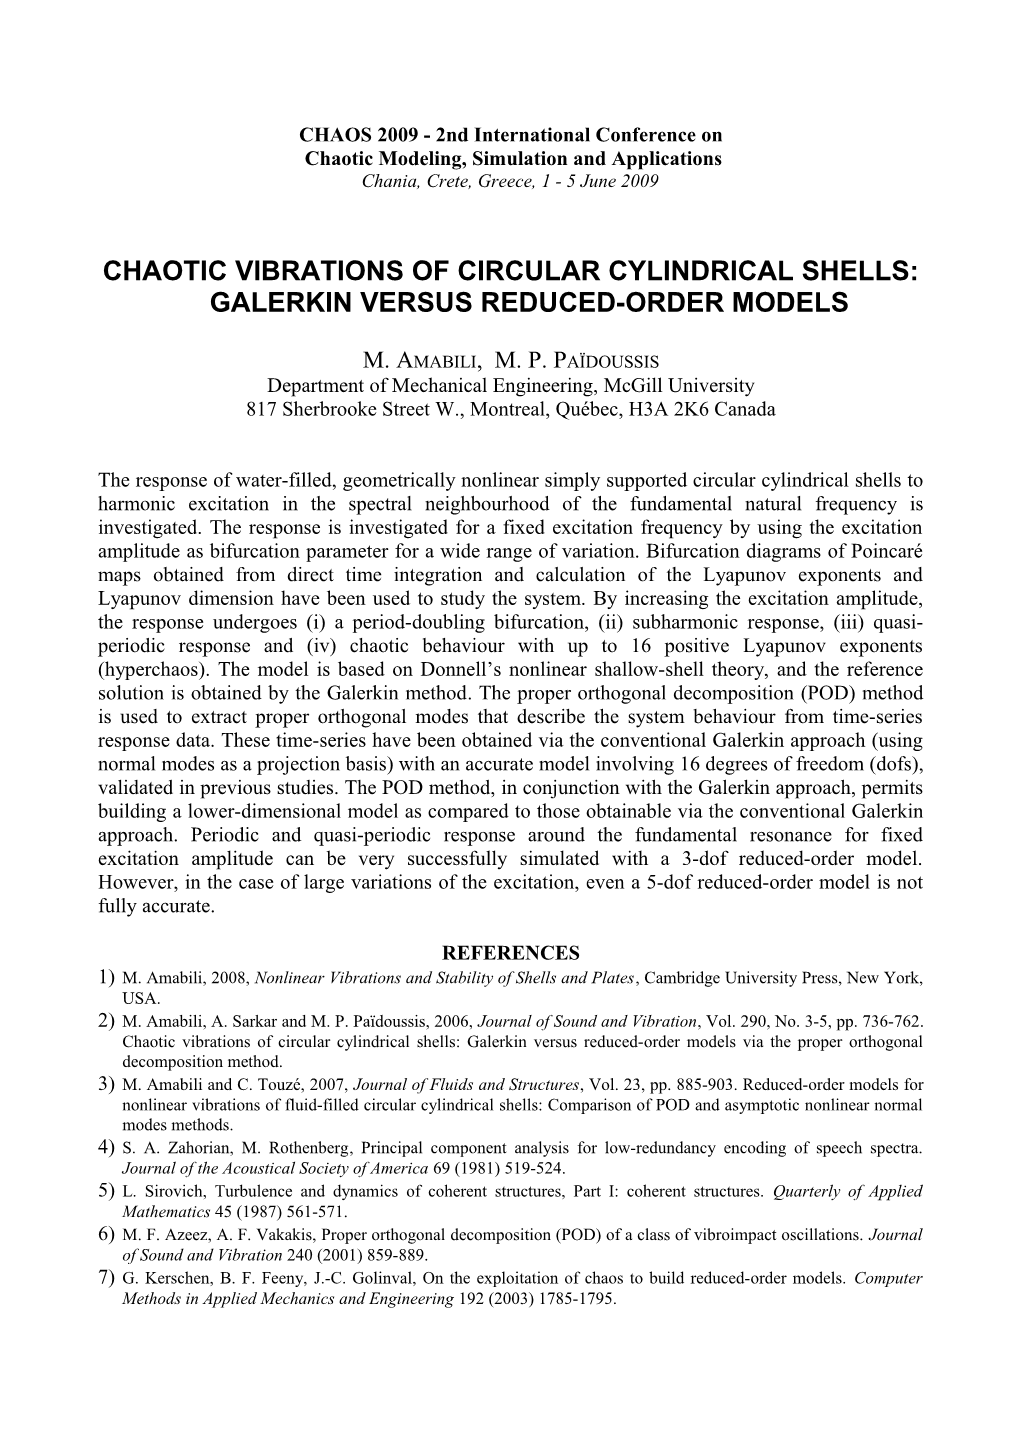 Chaotic Vibrations of Circular Cylindrical Shells: Galerkin Versus Reduced-Order Models